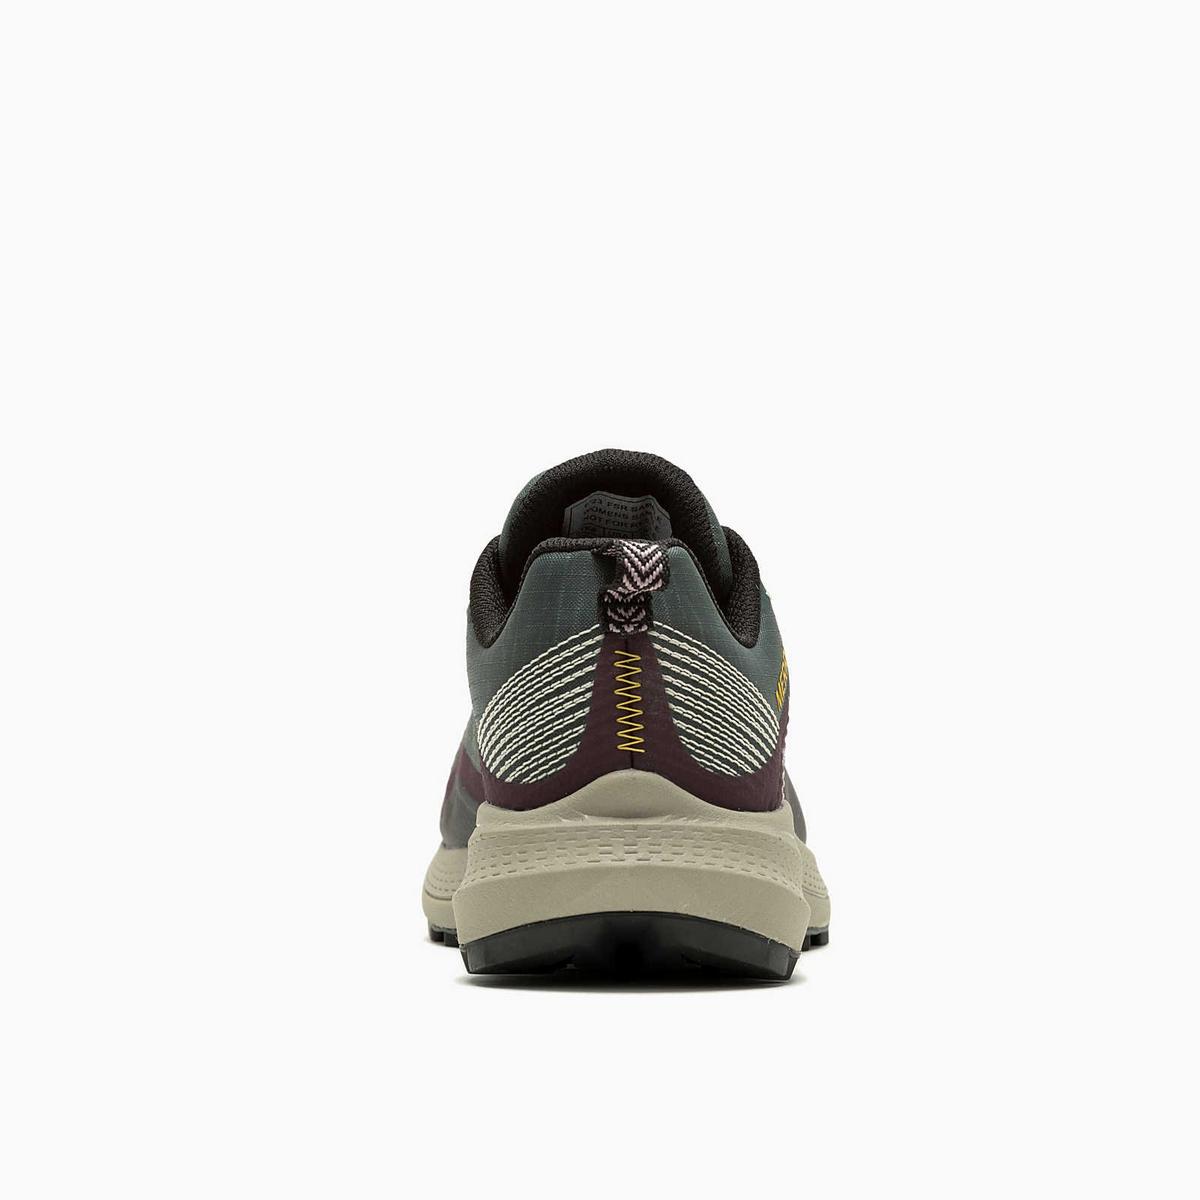 Merrell Women's MQM 3 GORE-TEX Hiking Shoes - Pine